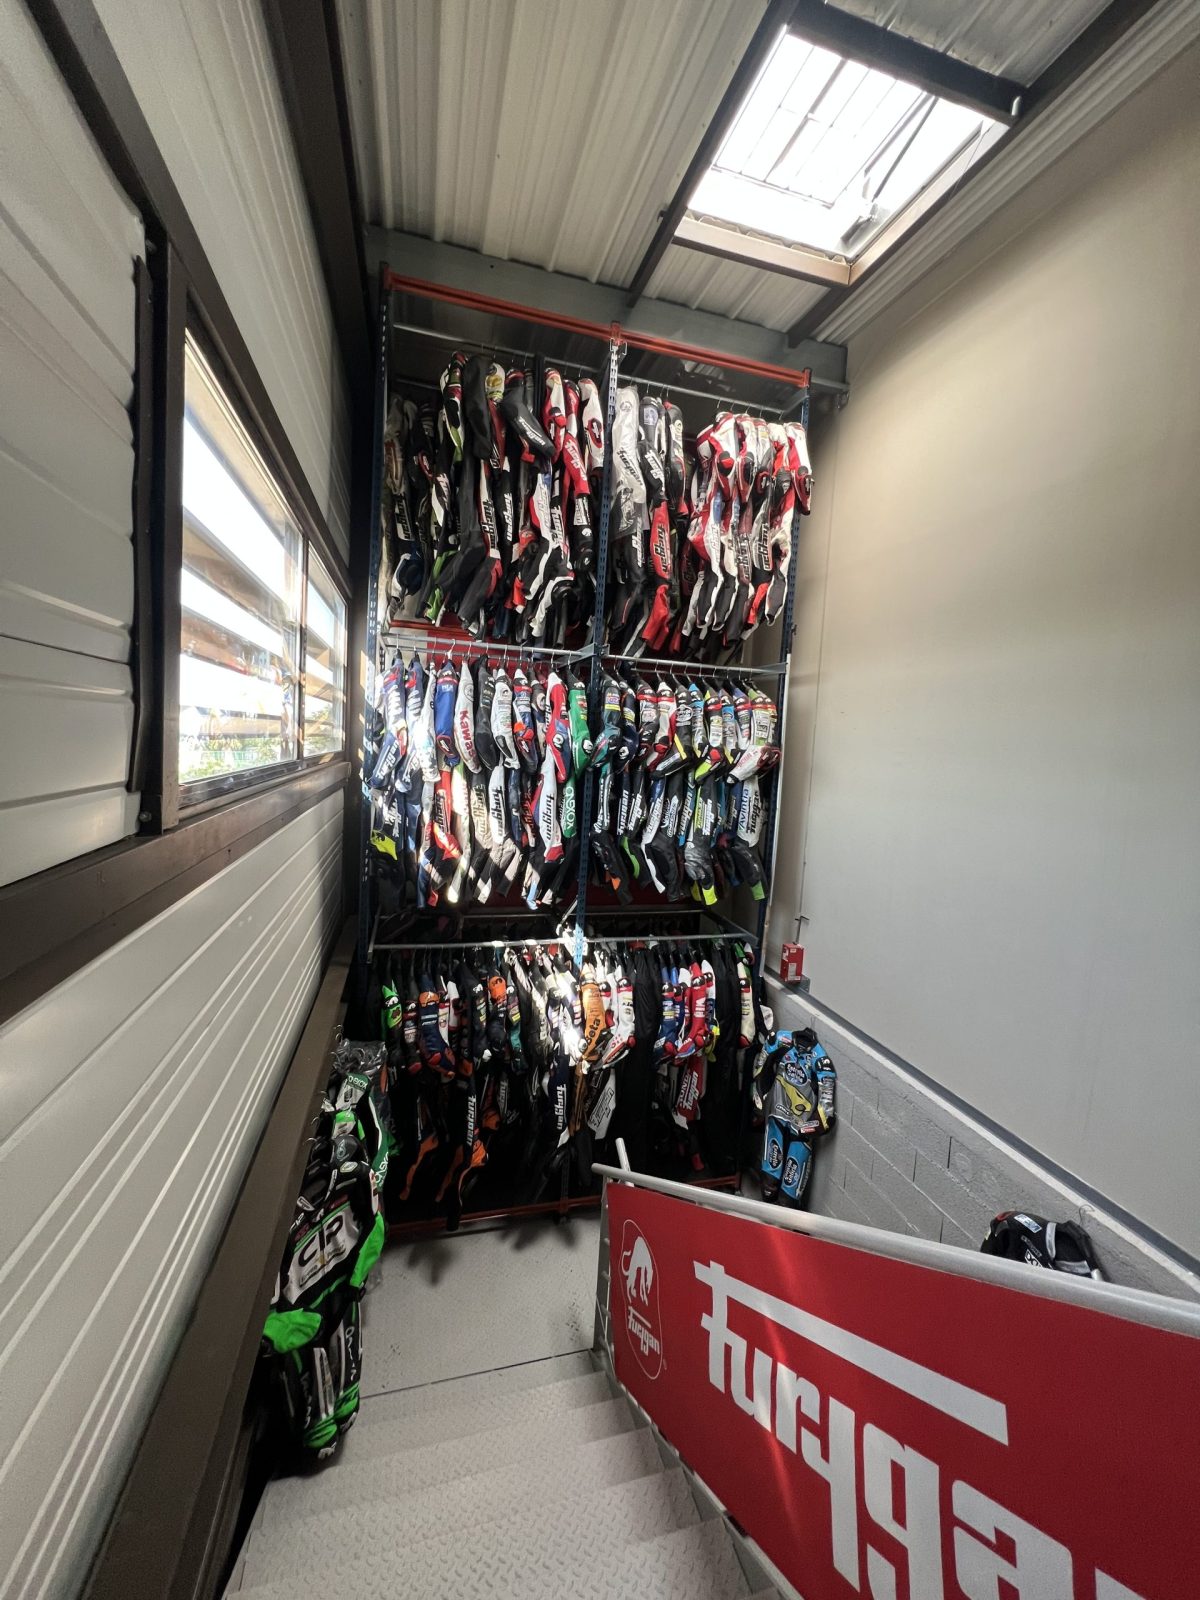 Hundreds of Moto GP racing suits created here at Furygan